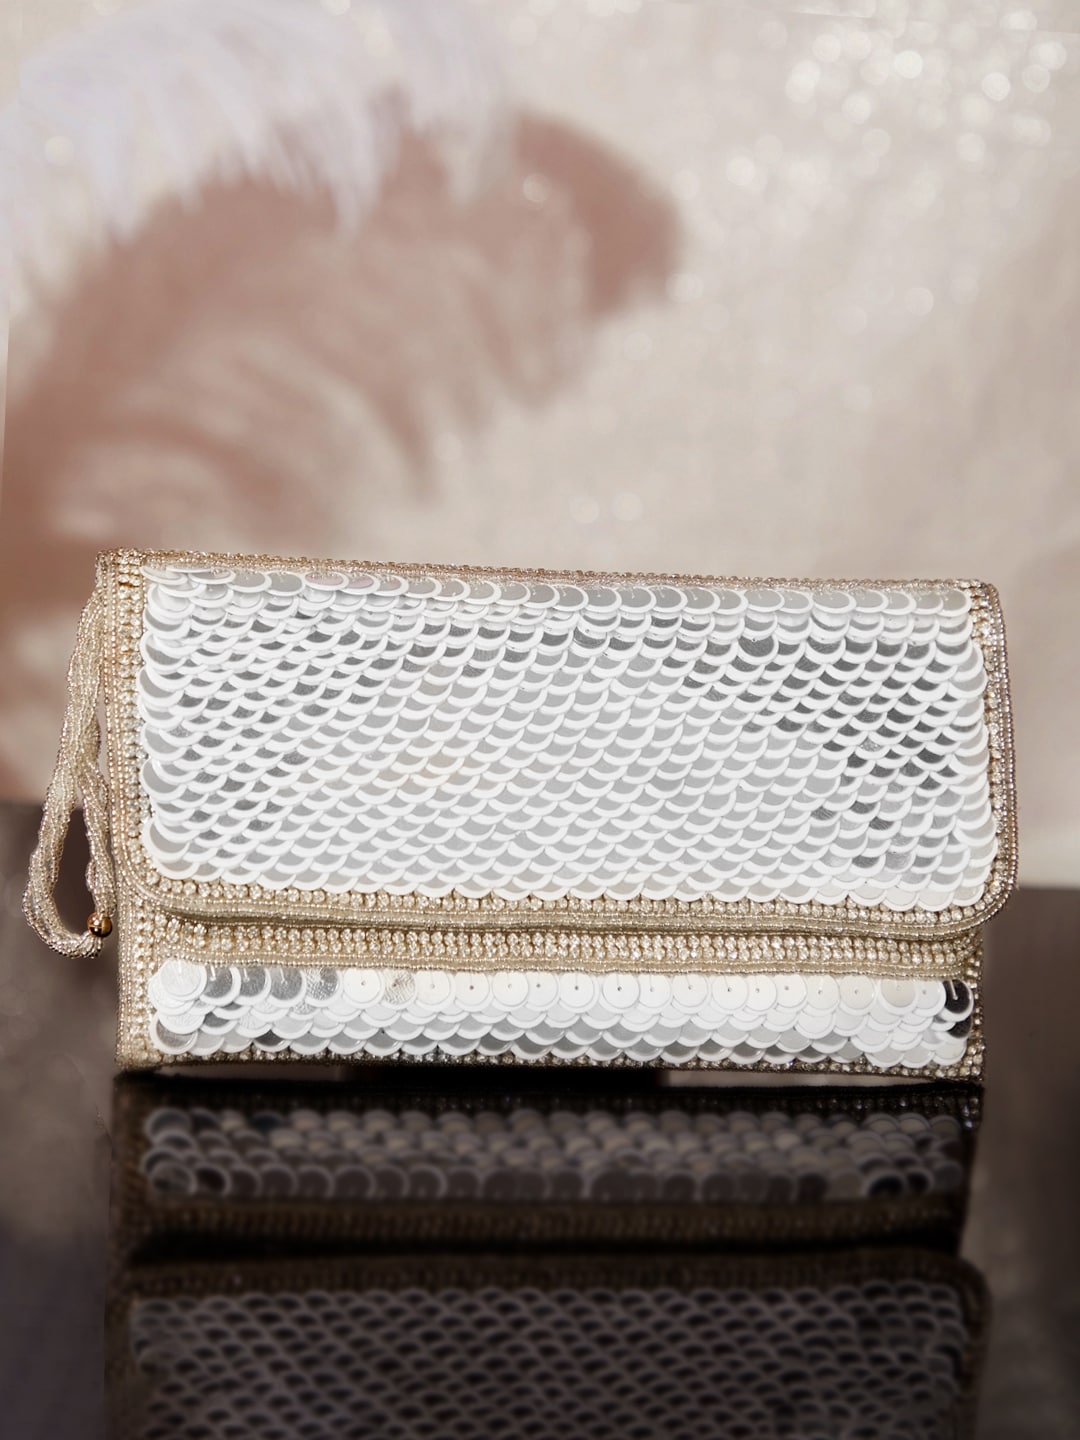 AUTH 925 STERLING SILVER FILIGREE FLORAL HANDBAG PURSE | eBay | Silver  purses, Silver handbag, Purses